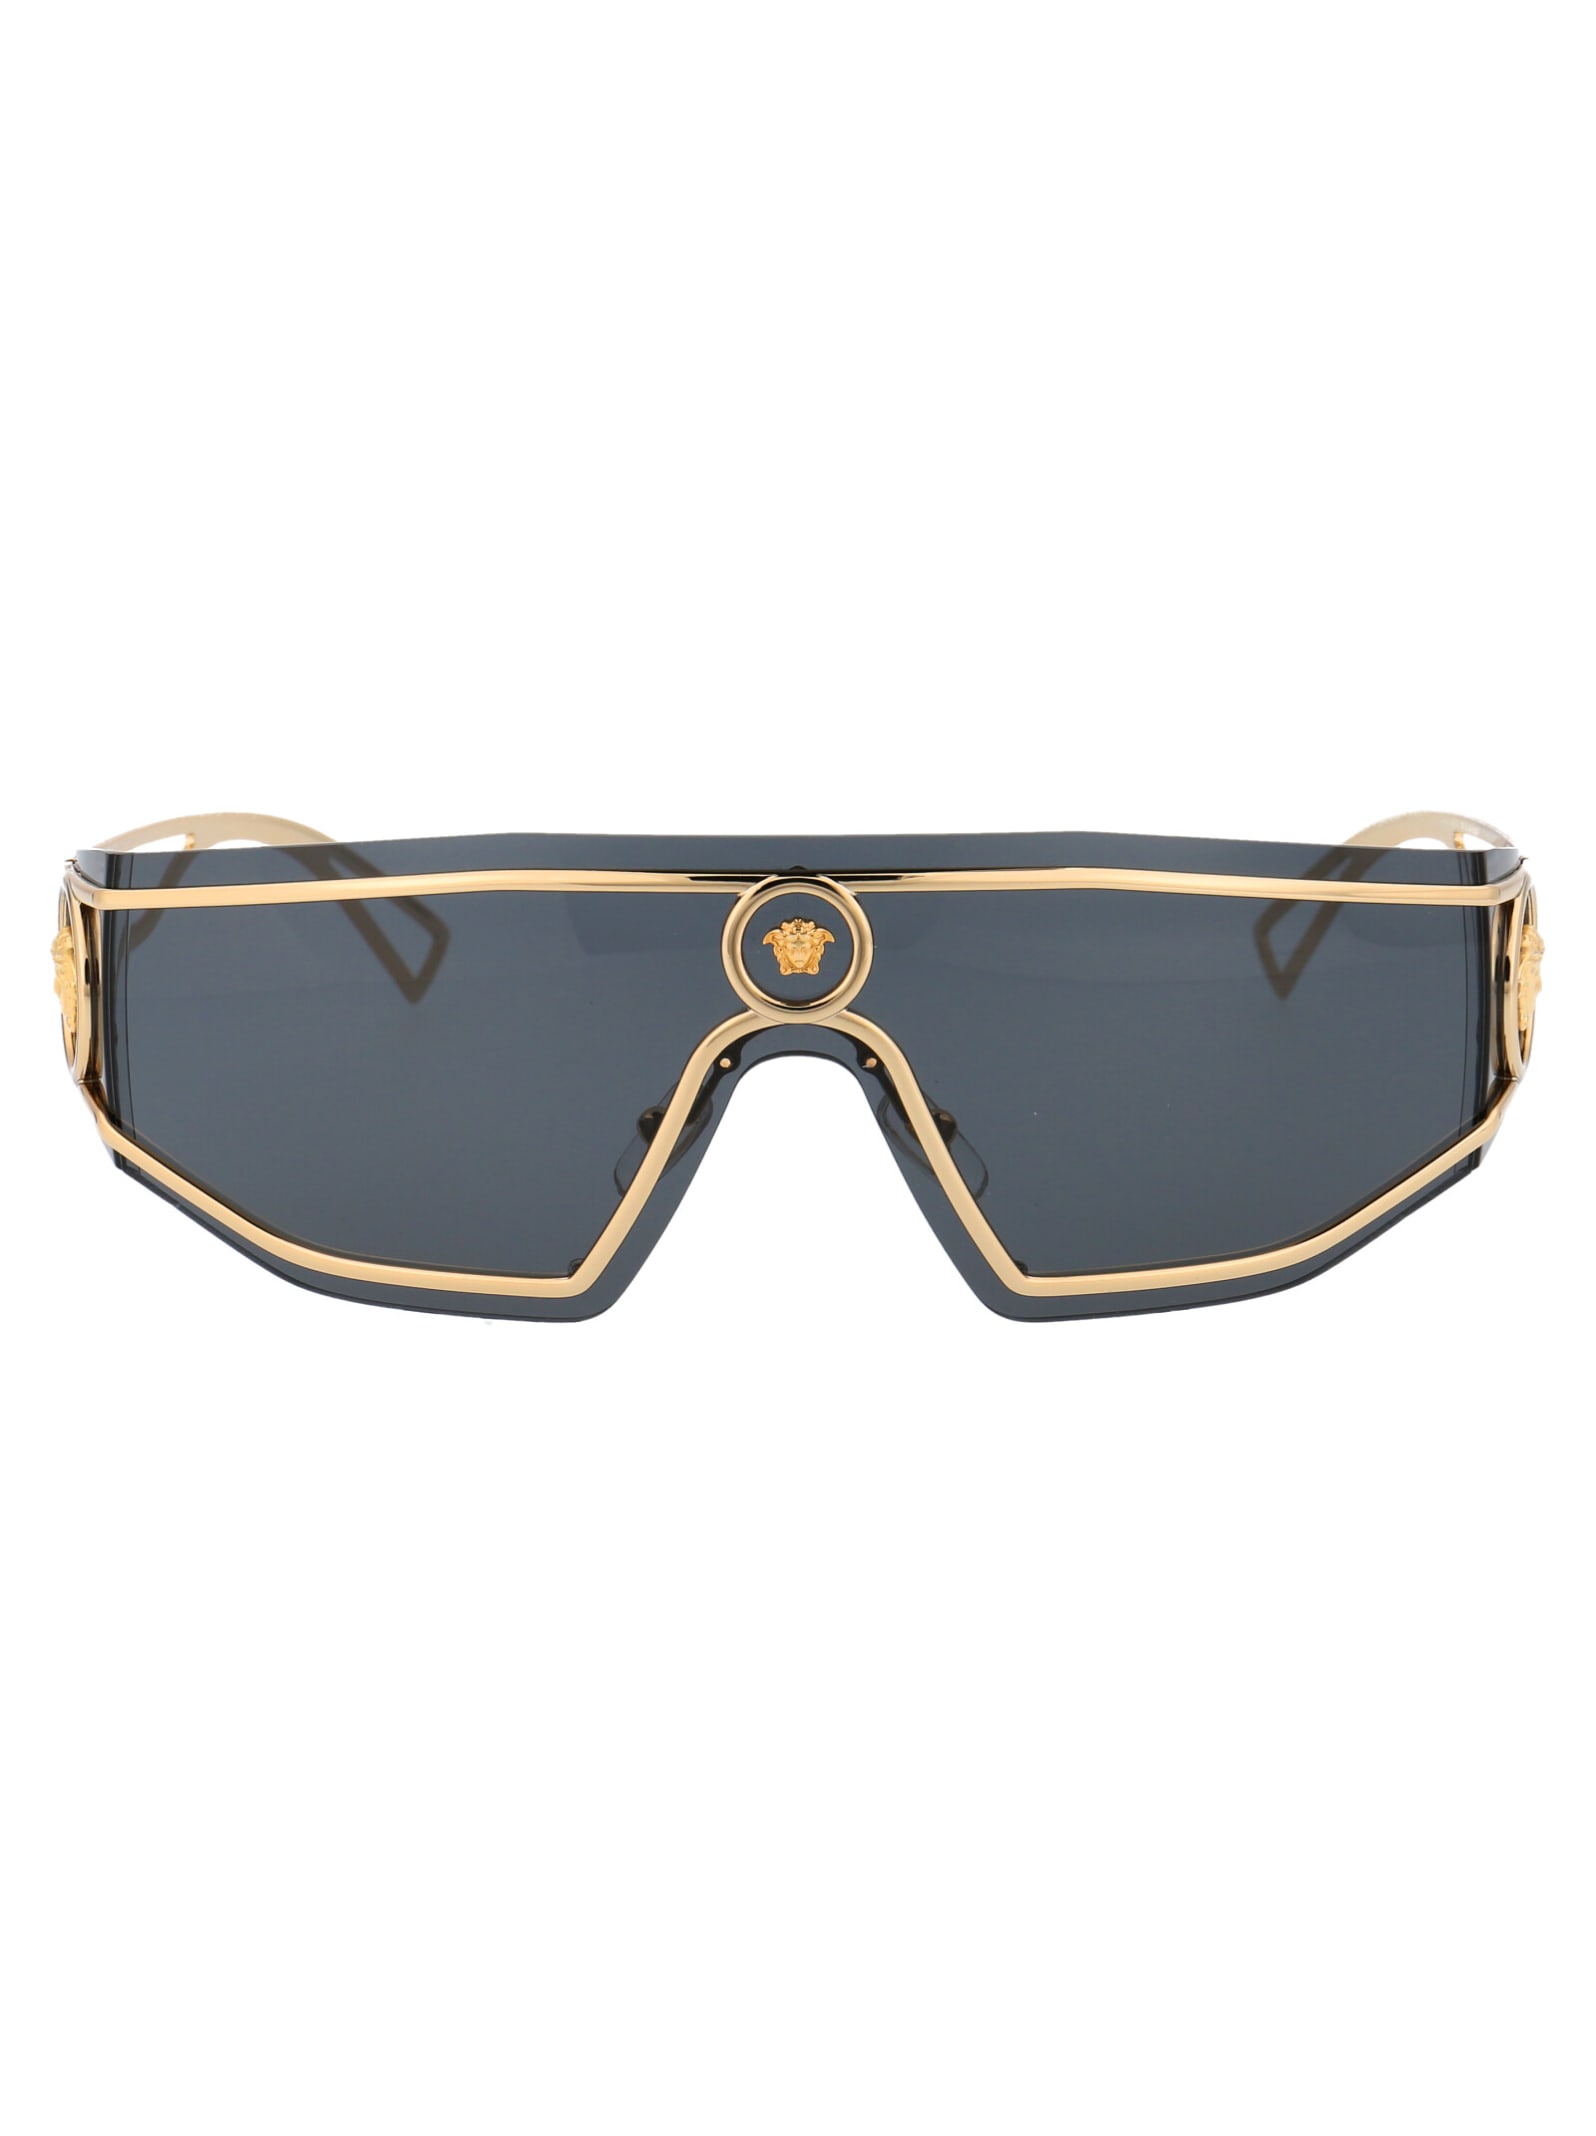 Versace 0ve2226 Sunglasses